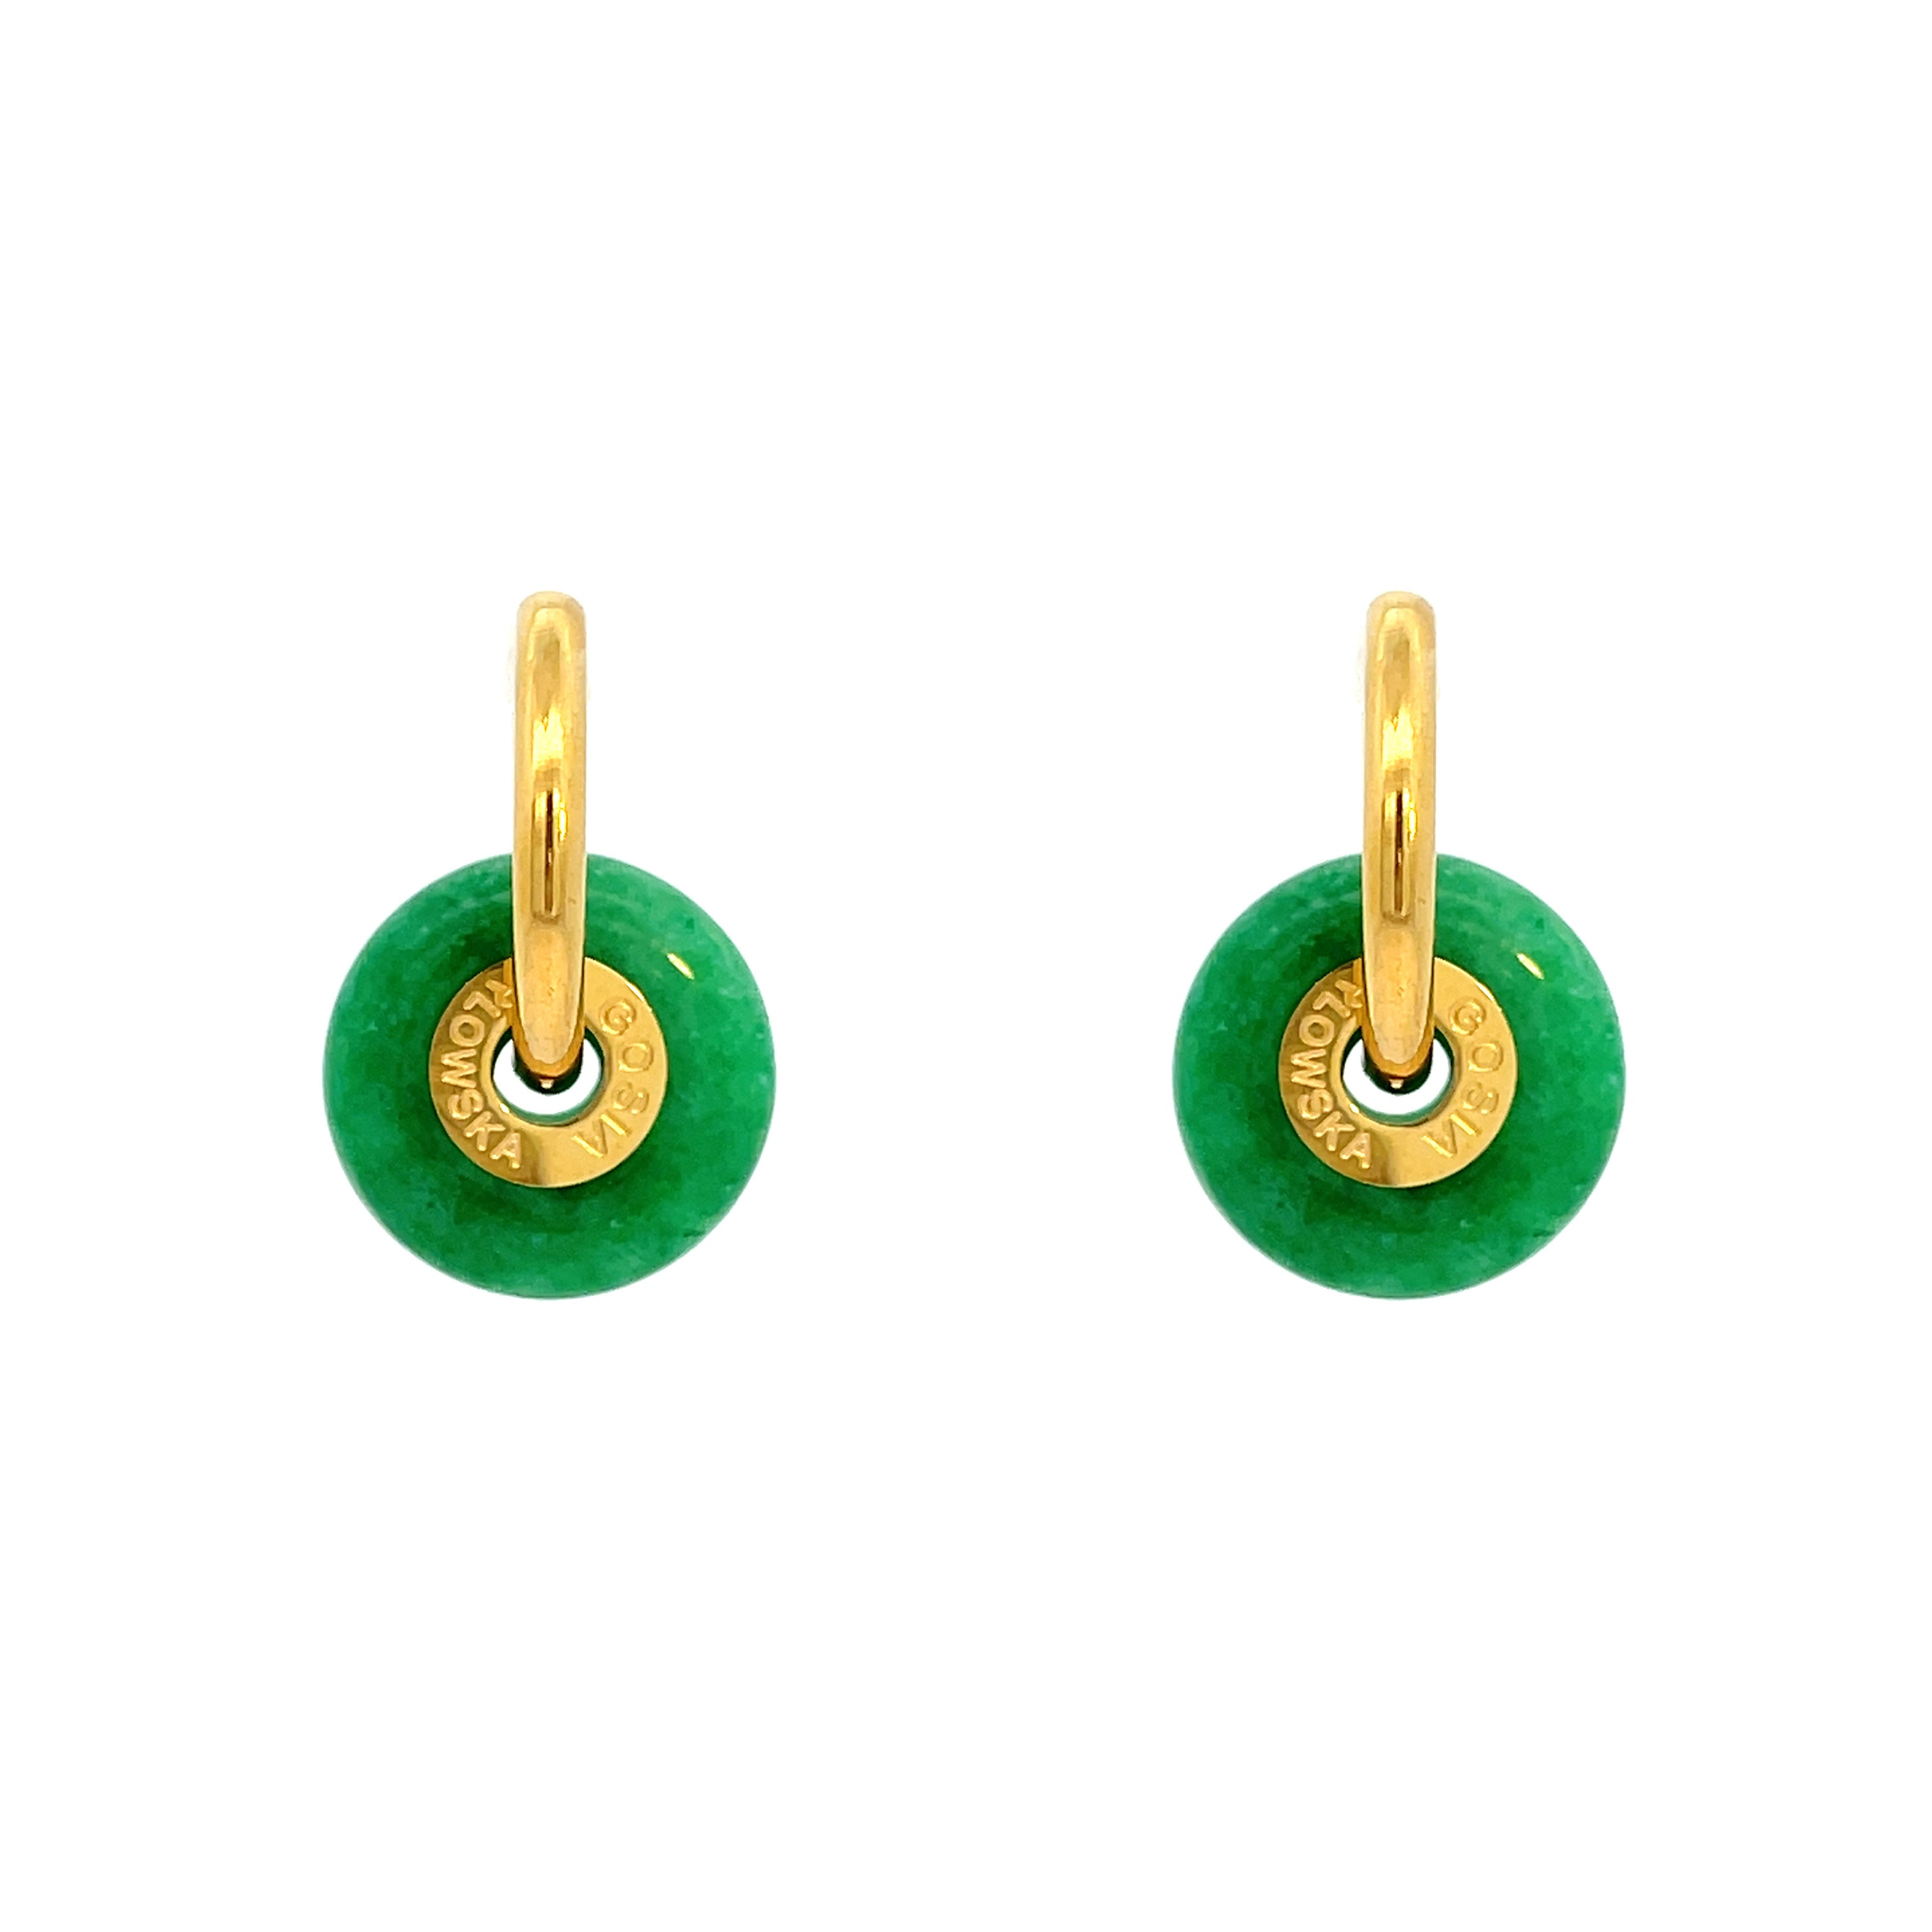 Stunning Green Agate Stone Earrings by Gosia Orlowska